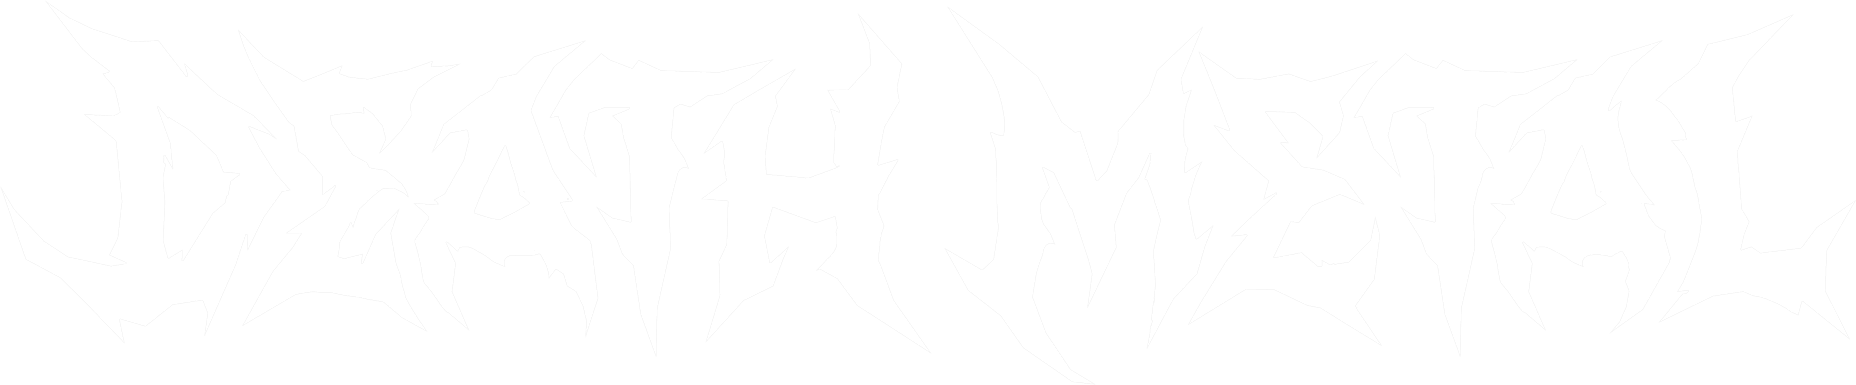 Death Metal logo